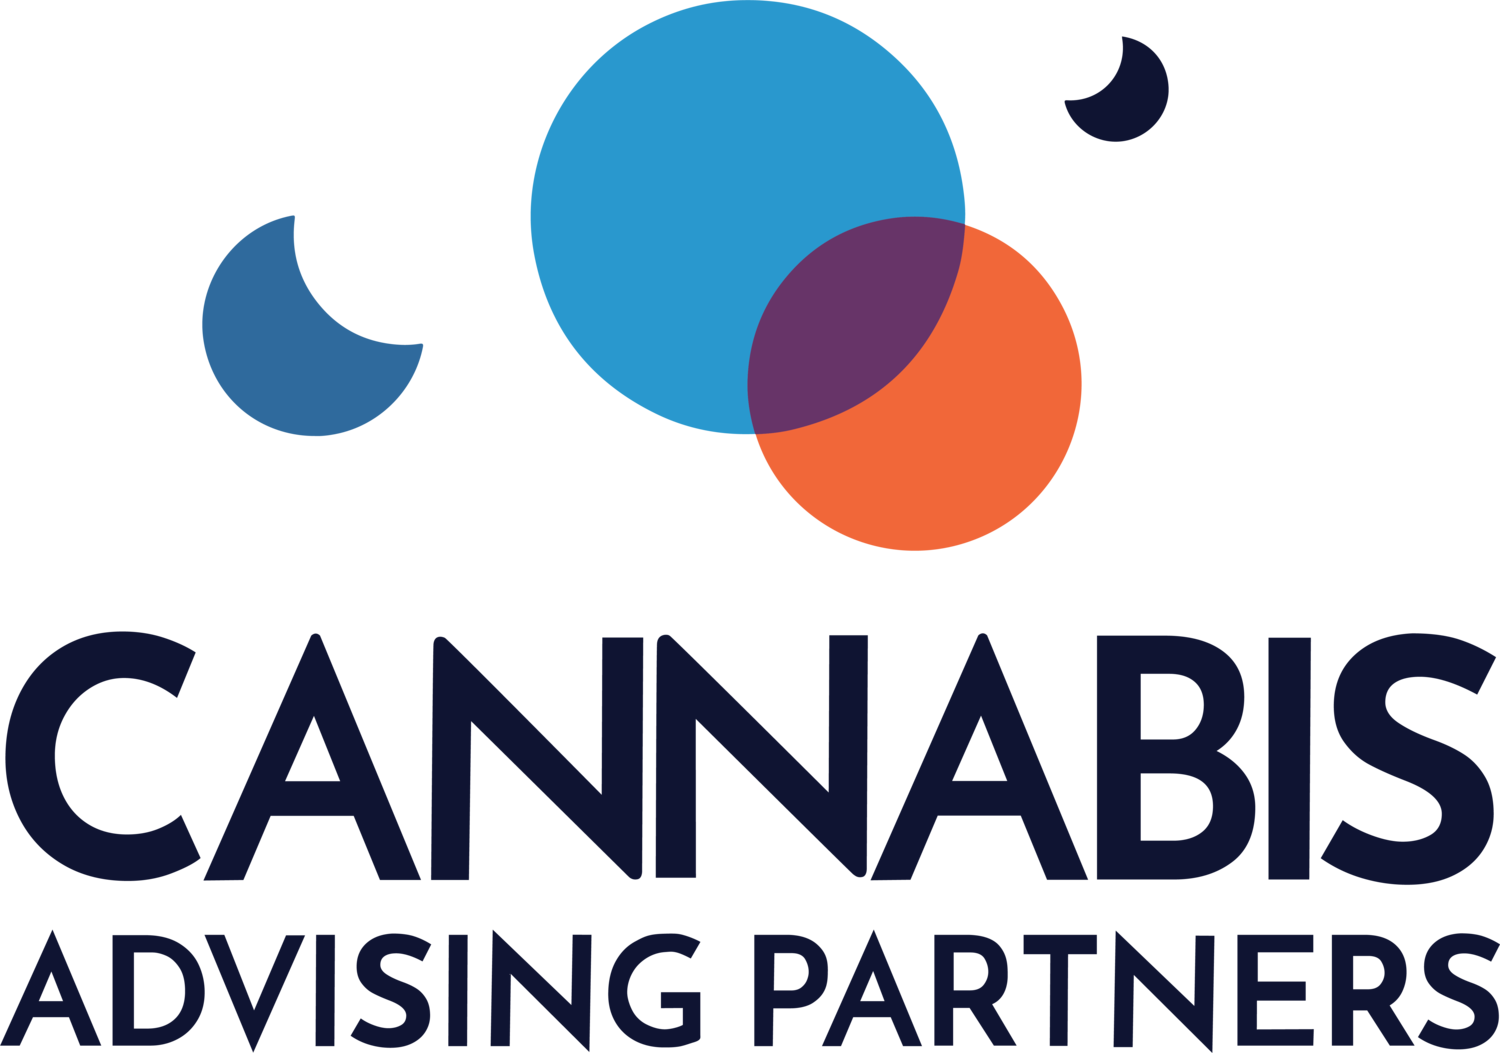 California Cannabis Consulting - Cannabis Advising Partners